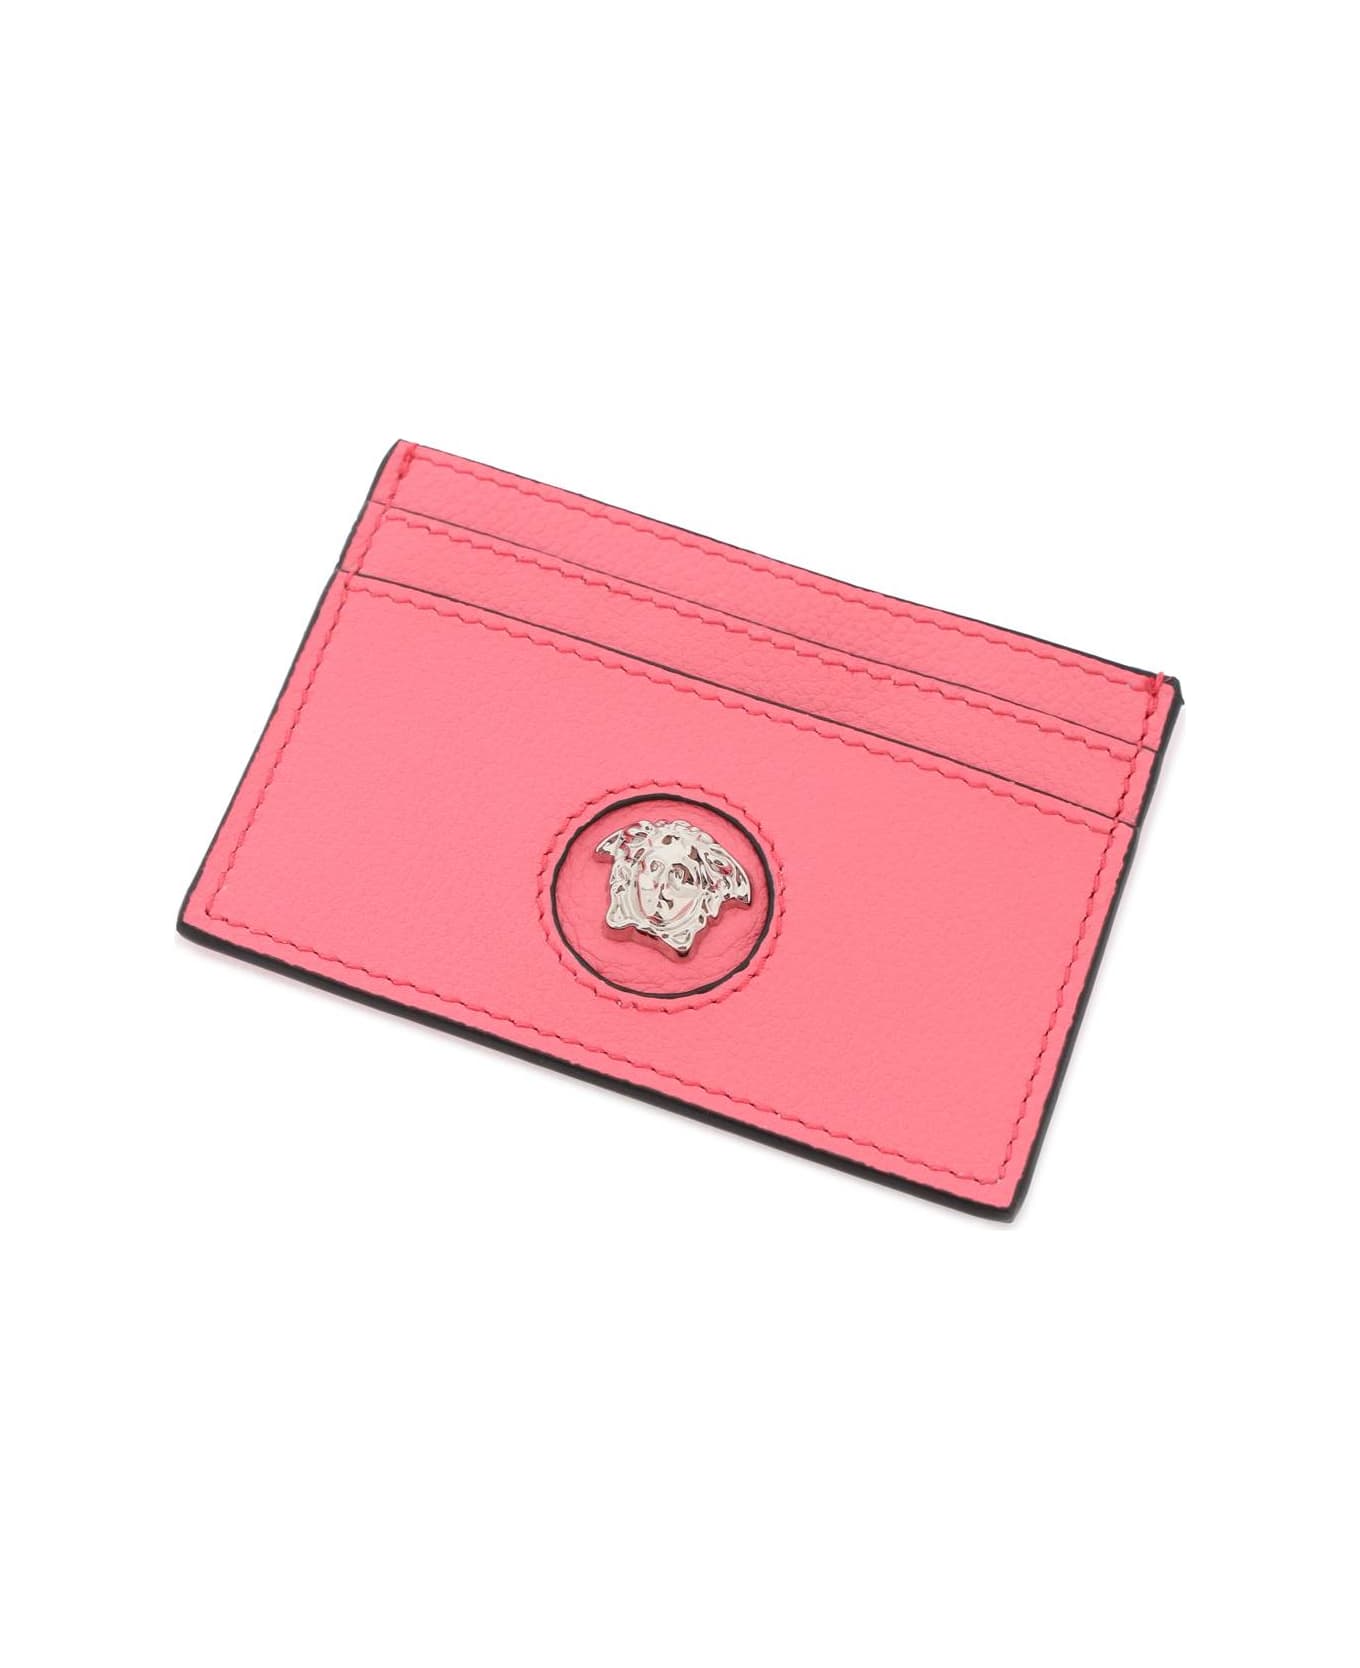 Versace Jellyfish Card Holder - Flamingo/palladio 財布